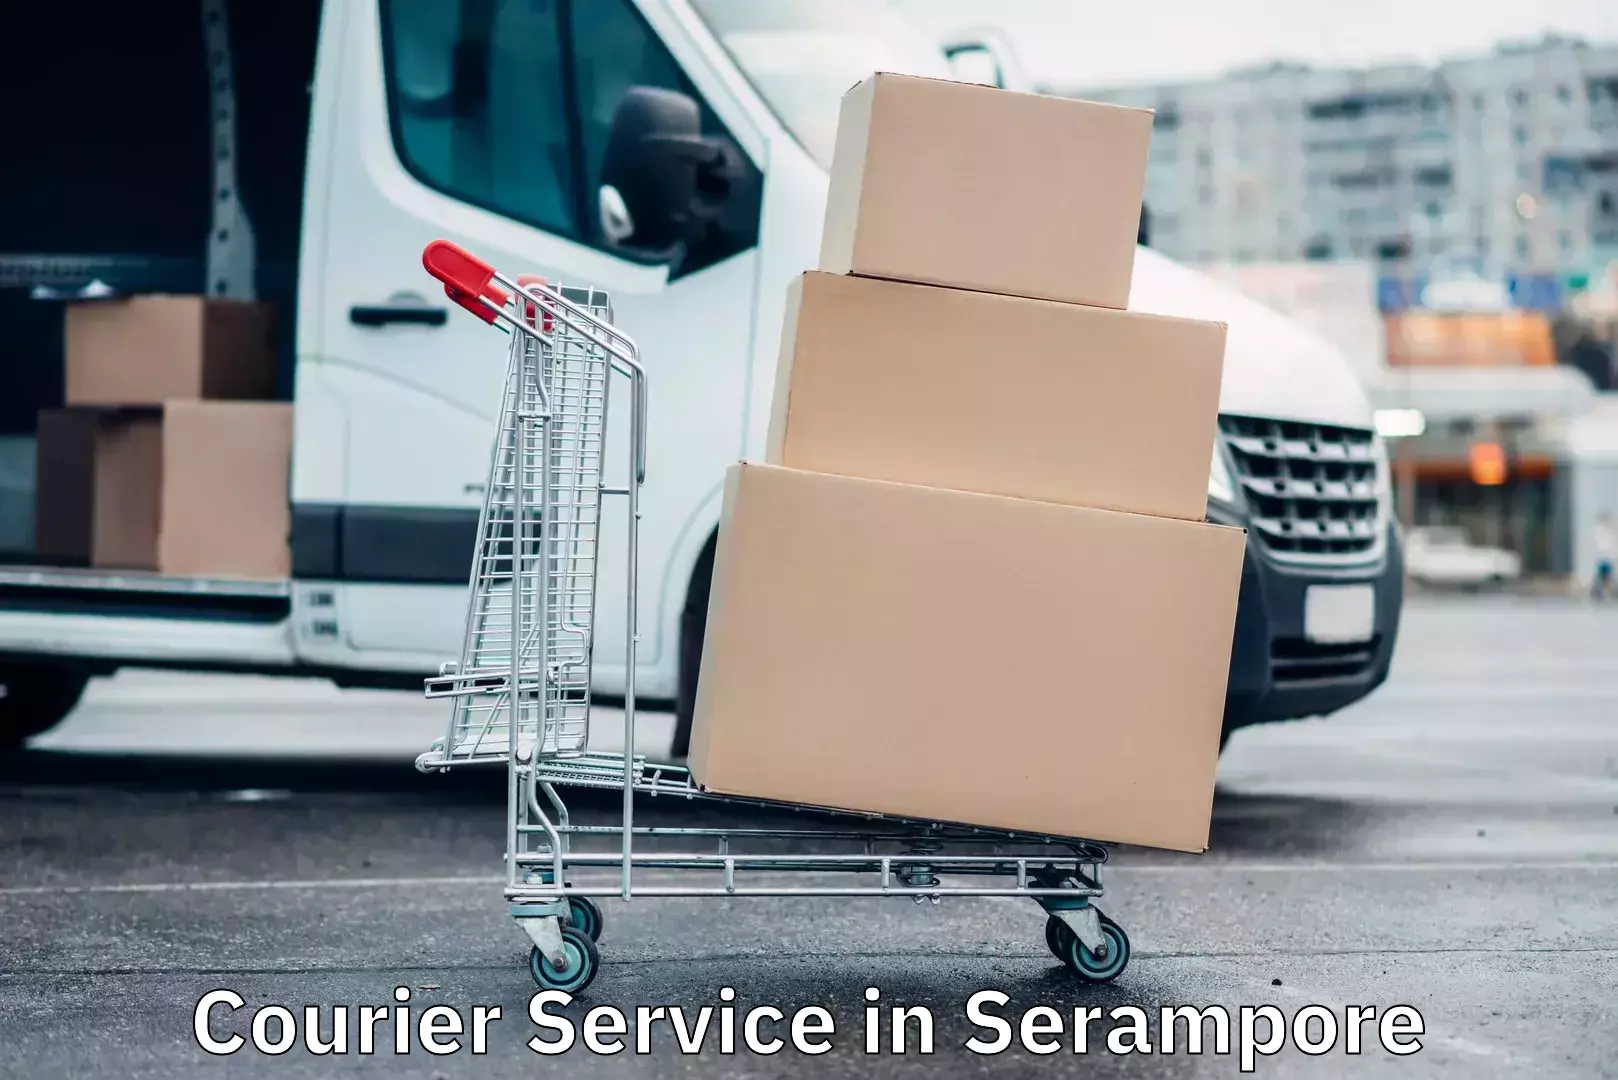 Express package transport in Serampore